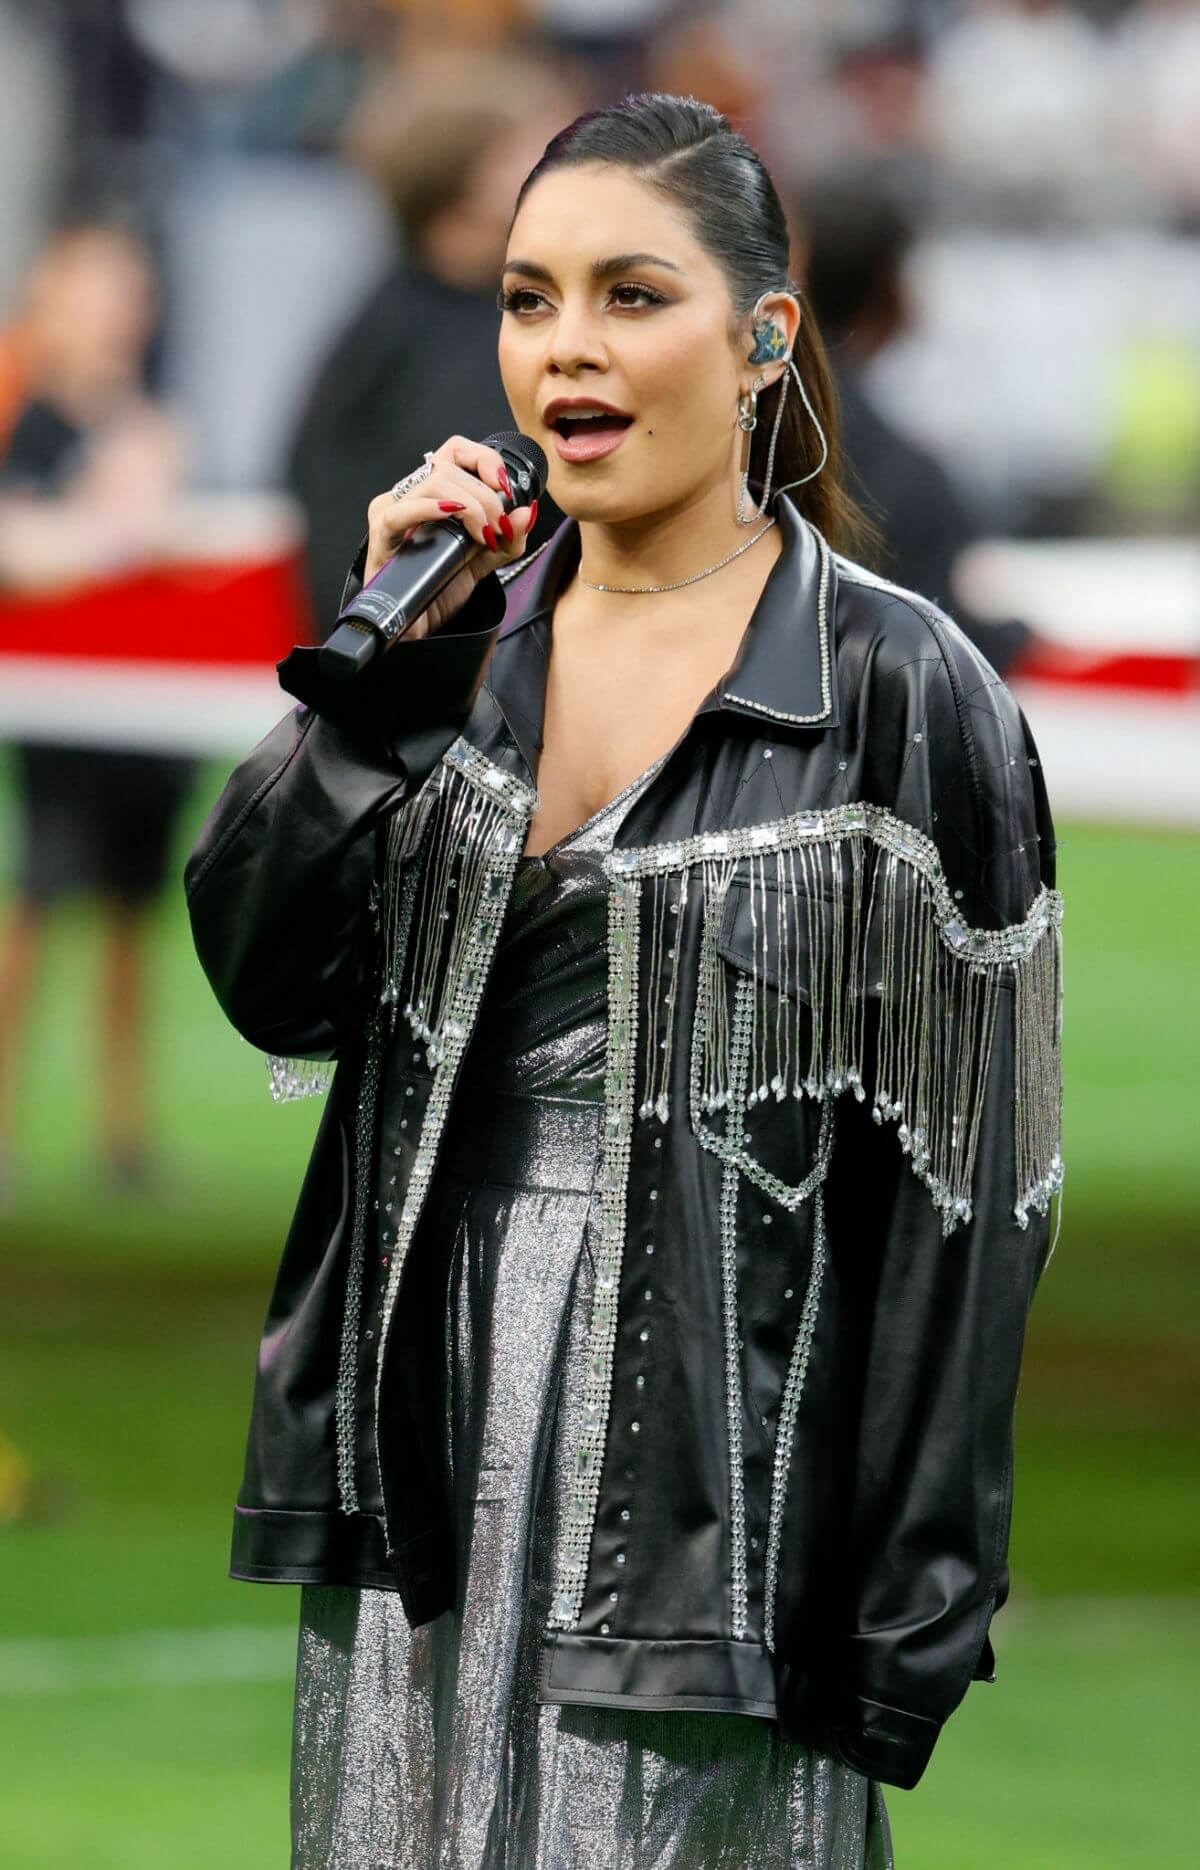 Vanessa Hudgens Sings Anthem at Allegiant Stadium in Nevada